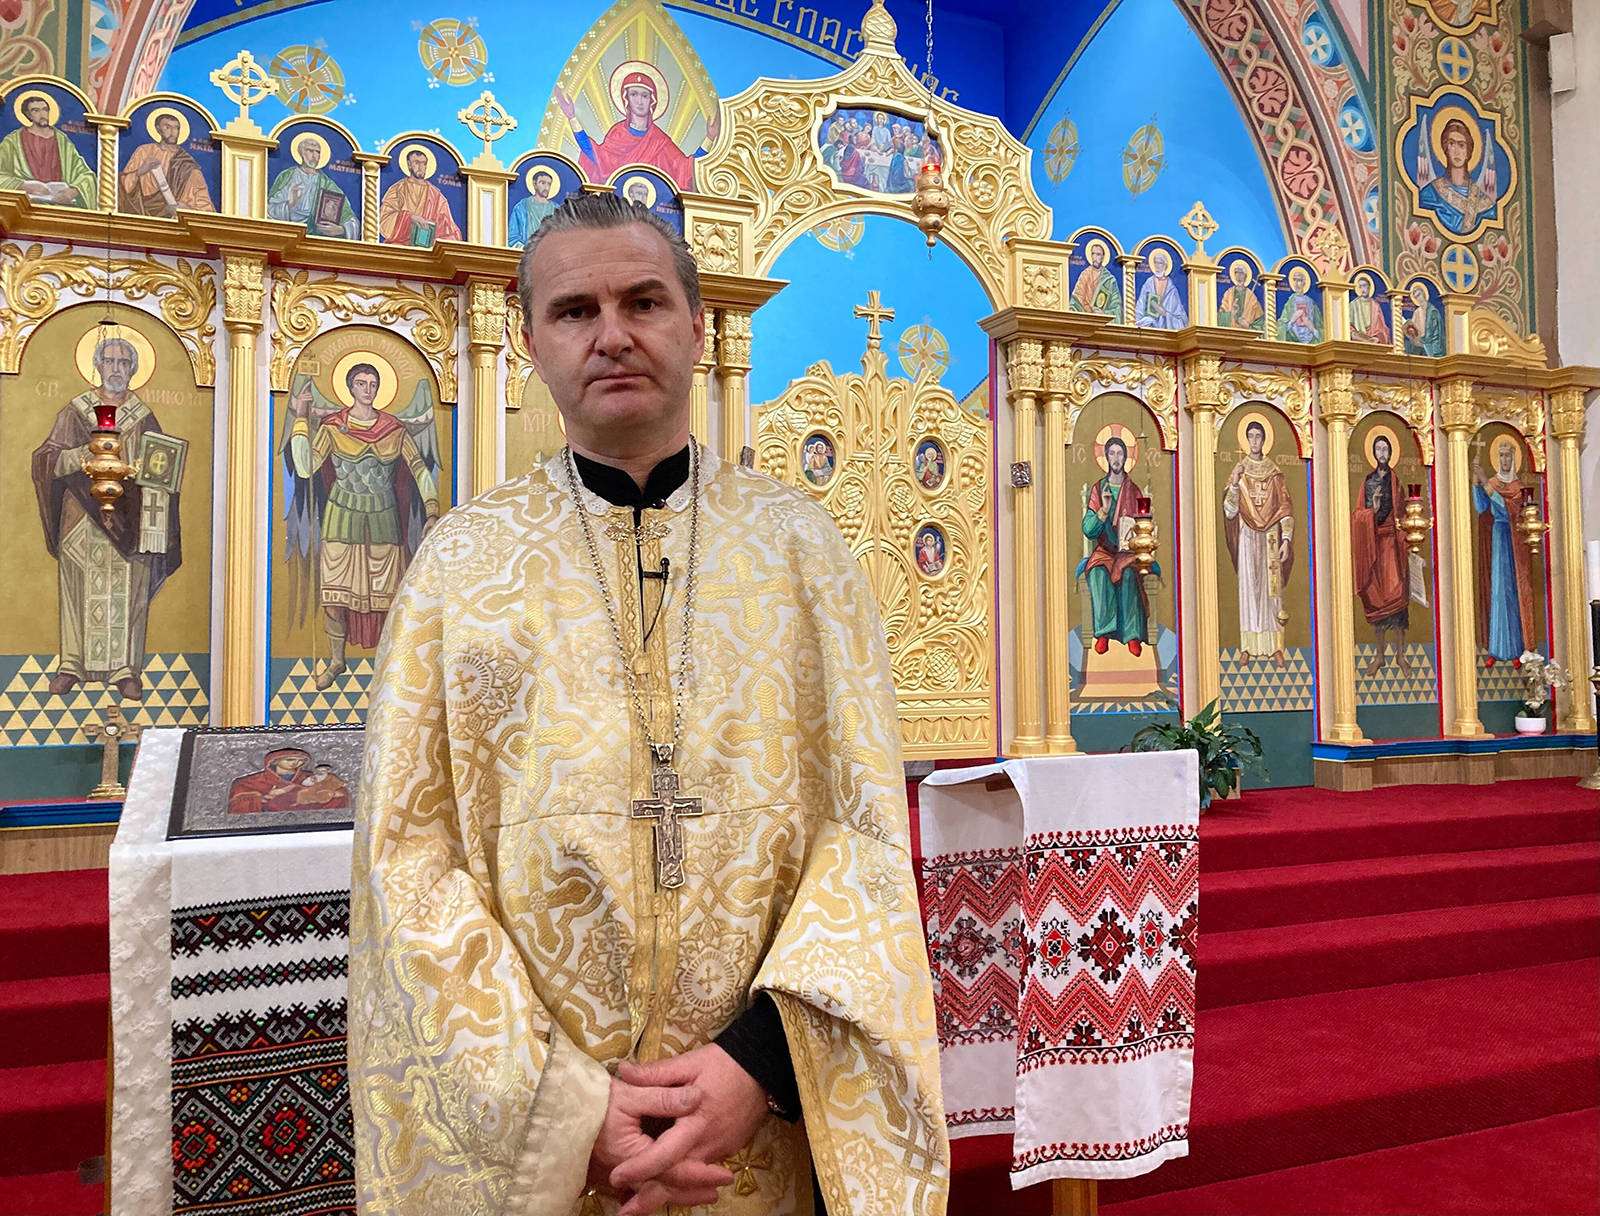 The Rev. Ihor Koshyk opened his Ukrainian Catholic Church, Nativity of the Blessed Virgin Mary, to offer support for Ukrainians in Los Angeles, Thursday, Feb. 24, 2022. RNS photo by Alejandra Molina